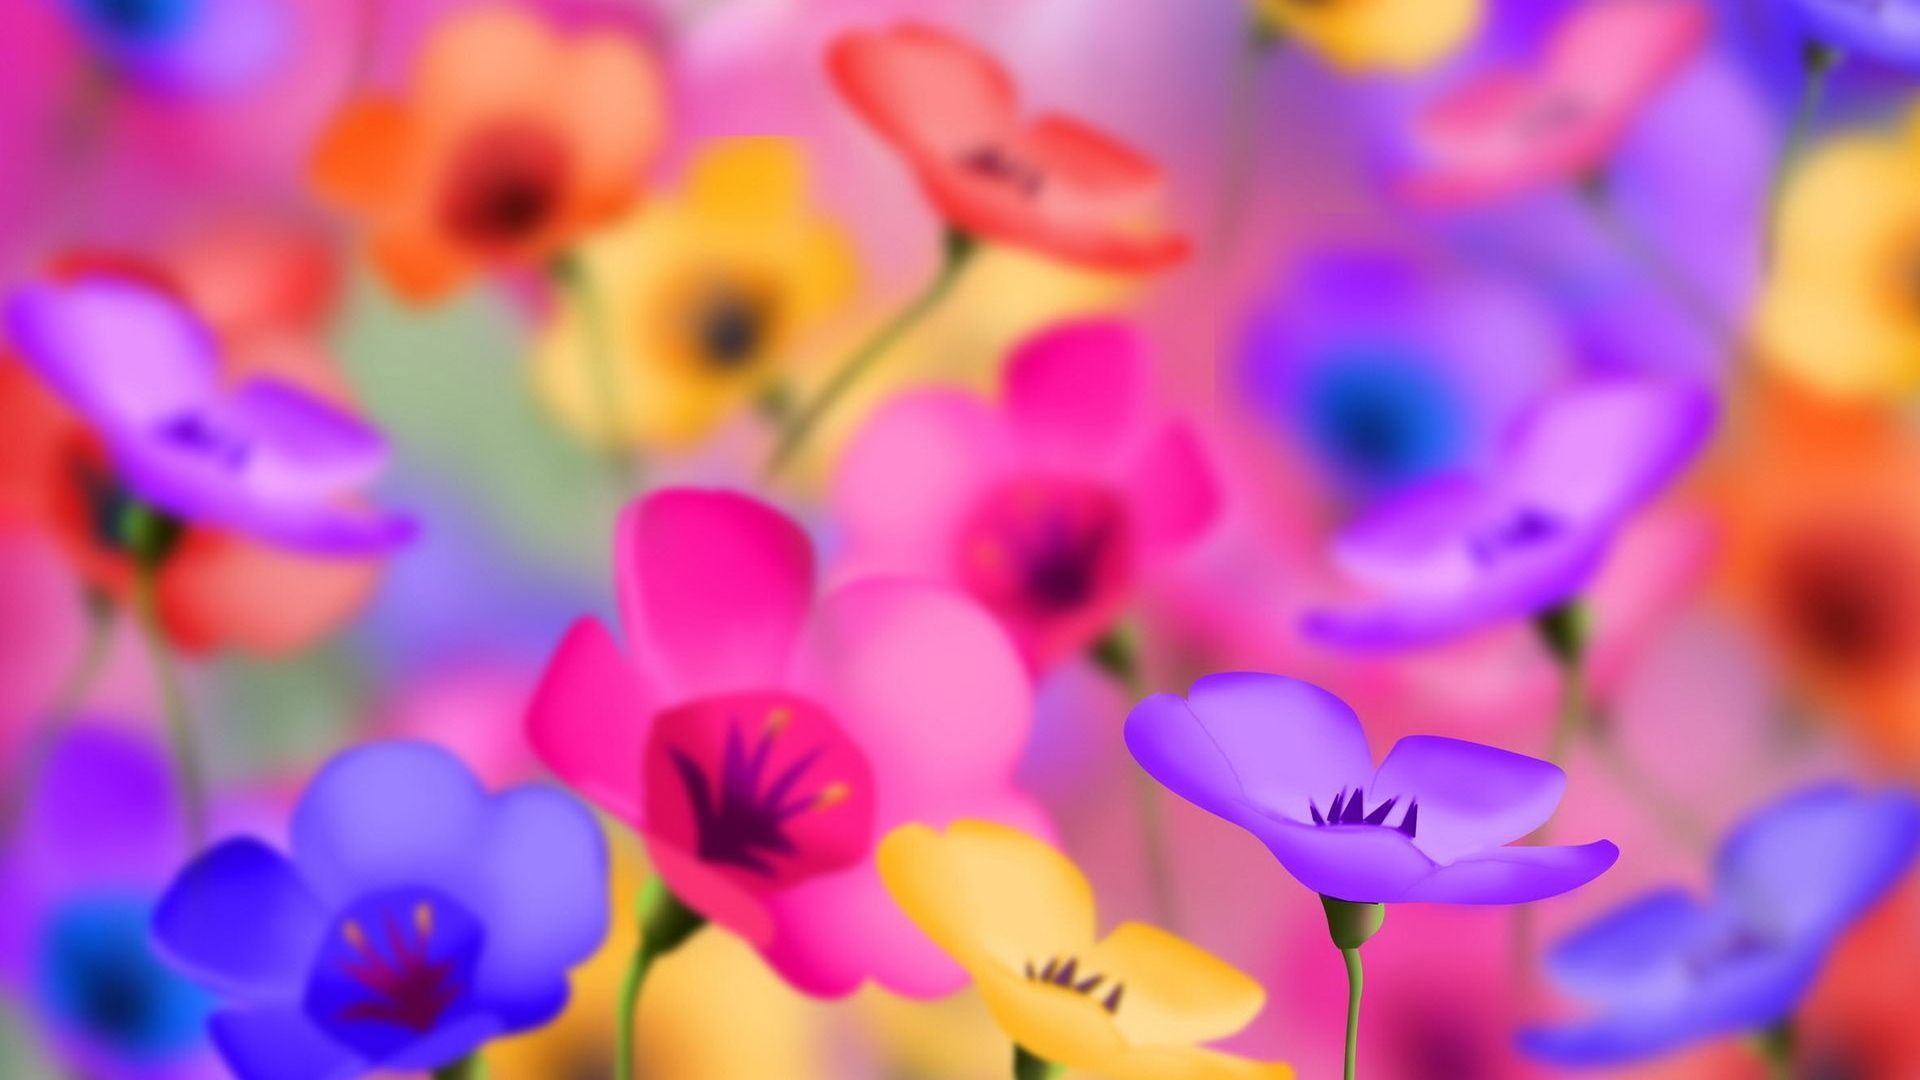 Full HD 1080p Flowers Wallpapers, Desktop Backgrounds HD Downloads ...